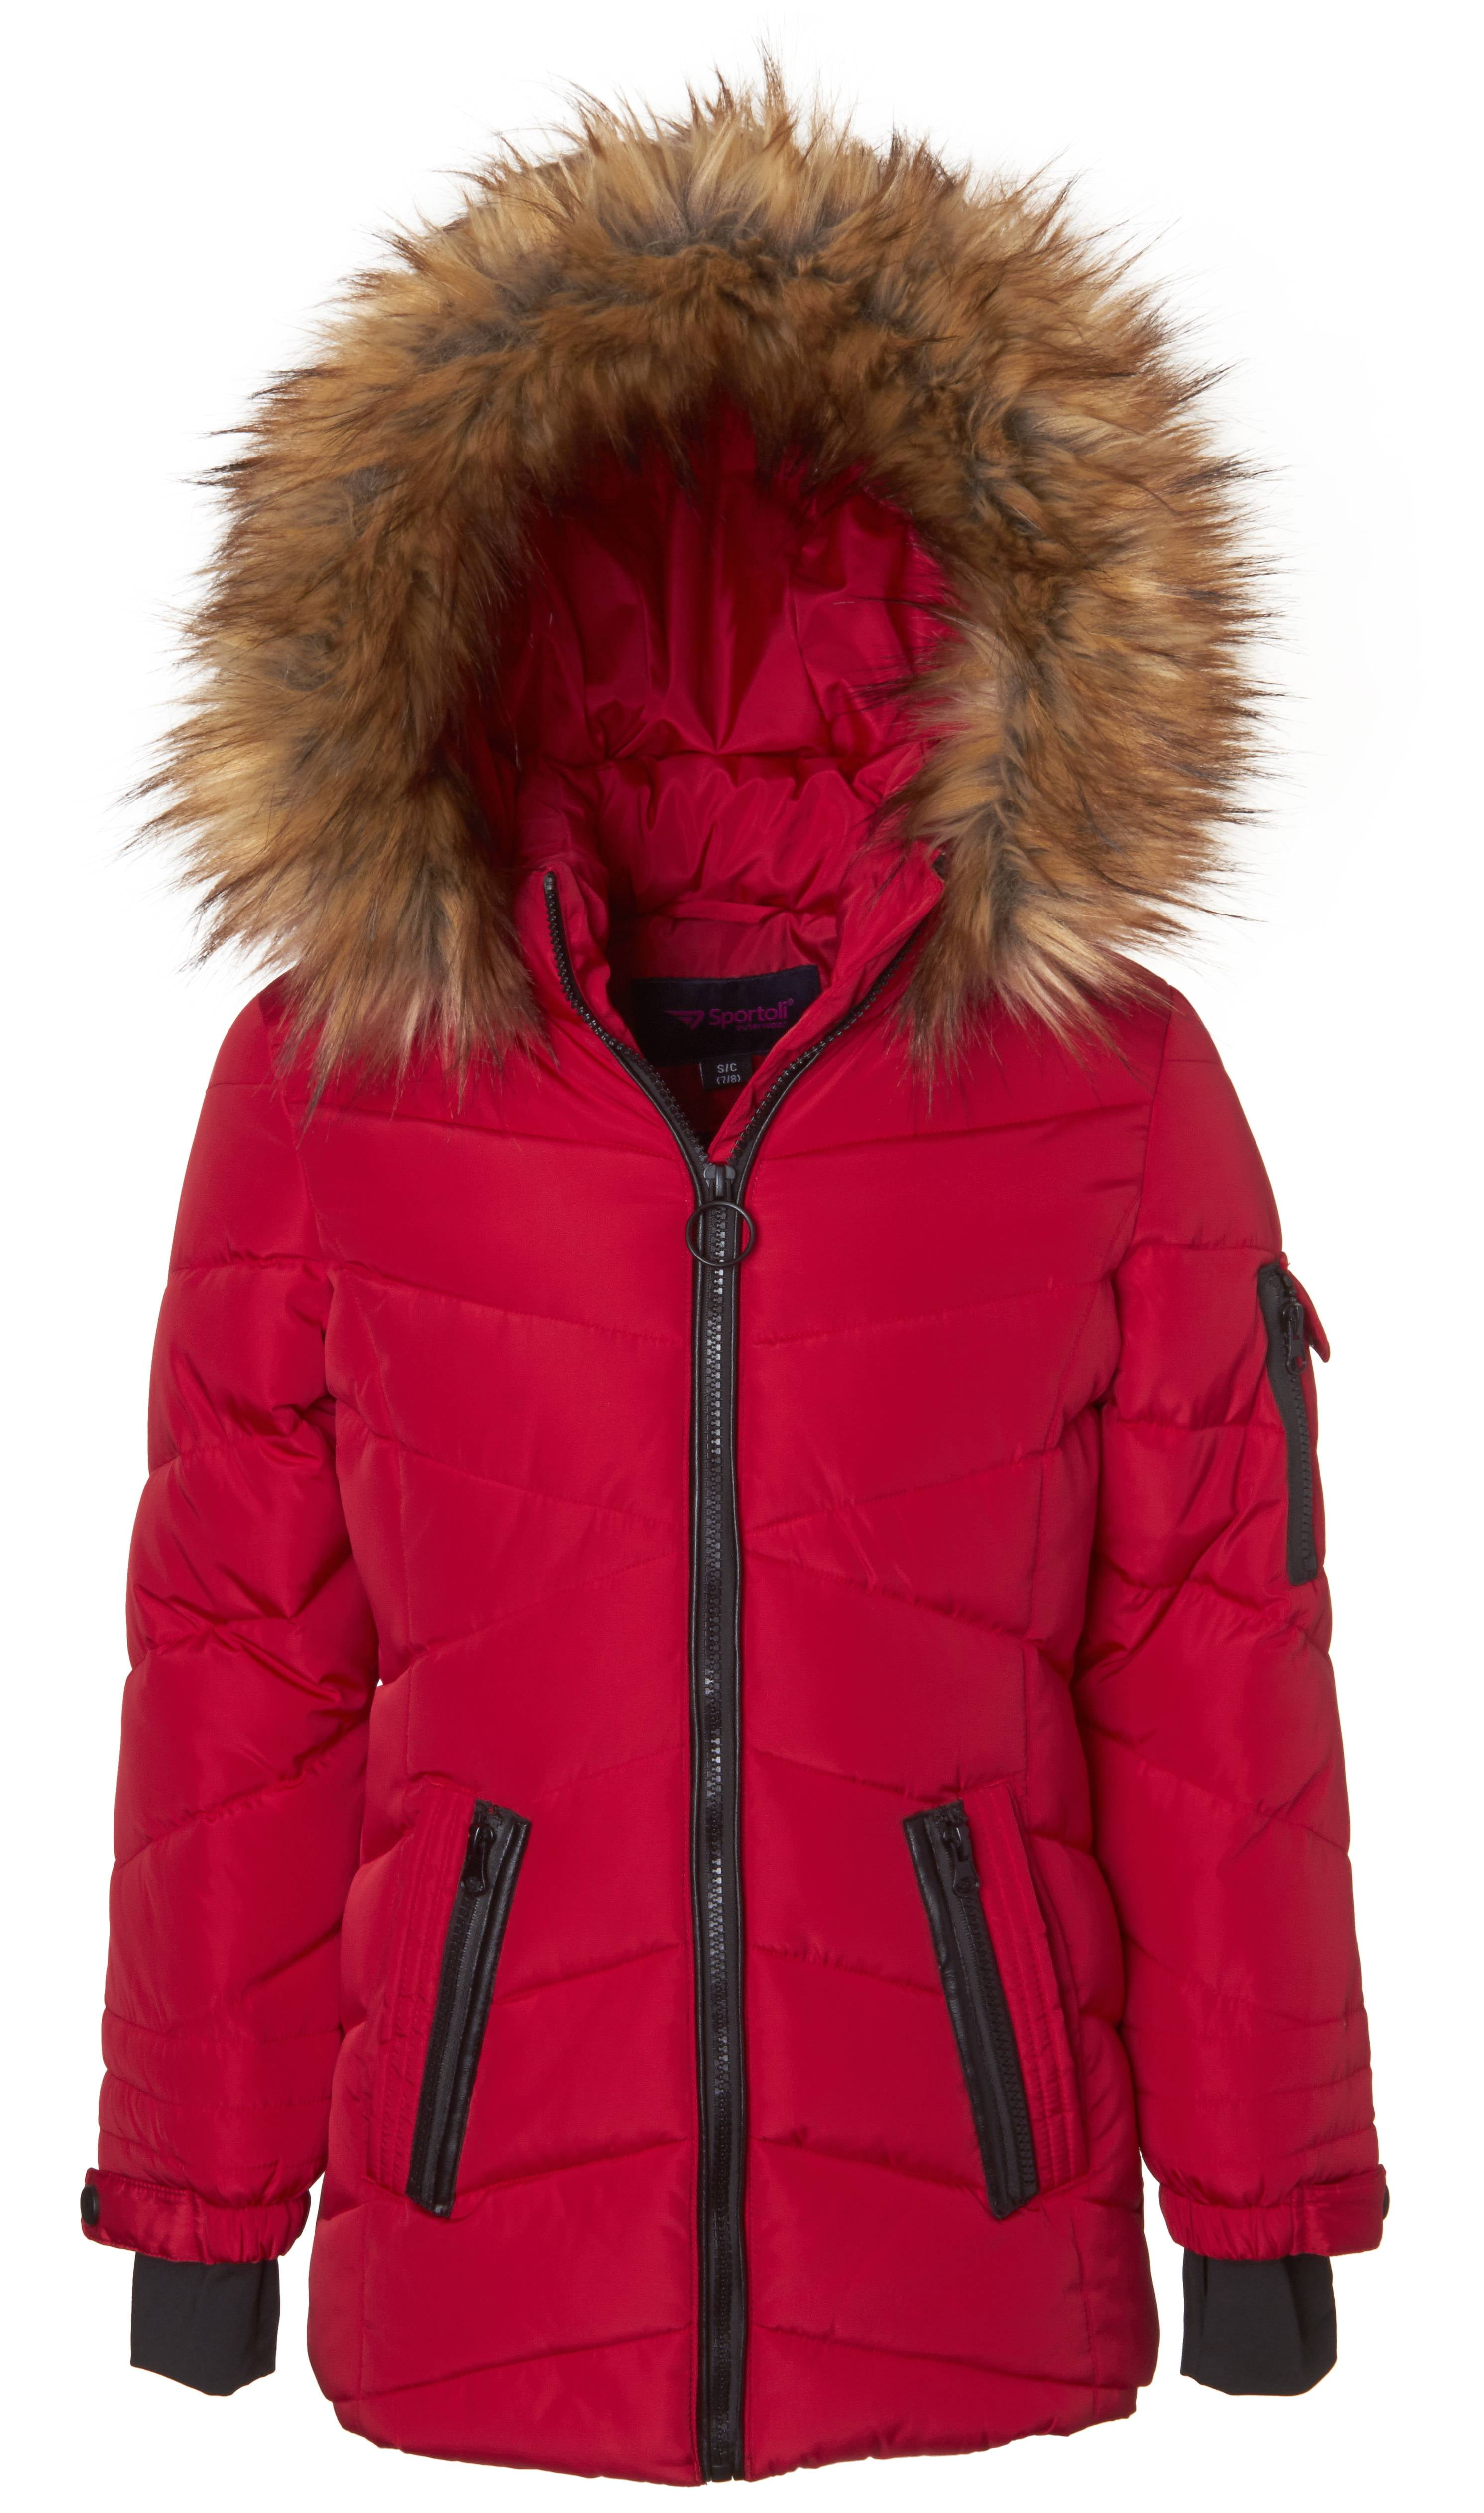 Sportoli - Sportoli Girls’ Heavy Quilt Lined Fashion Winter Jacket Coat ...